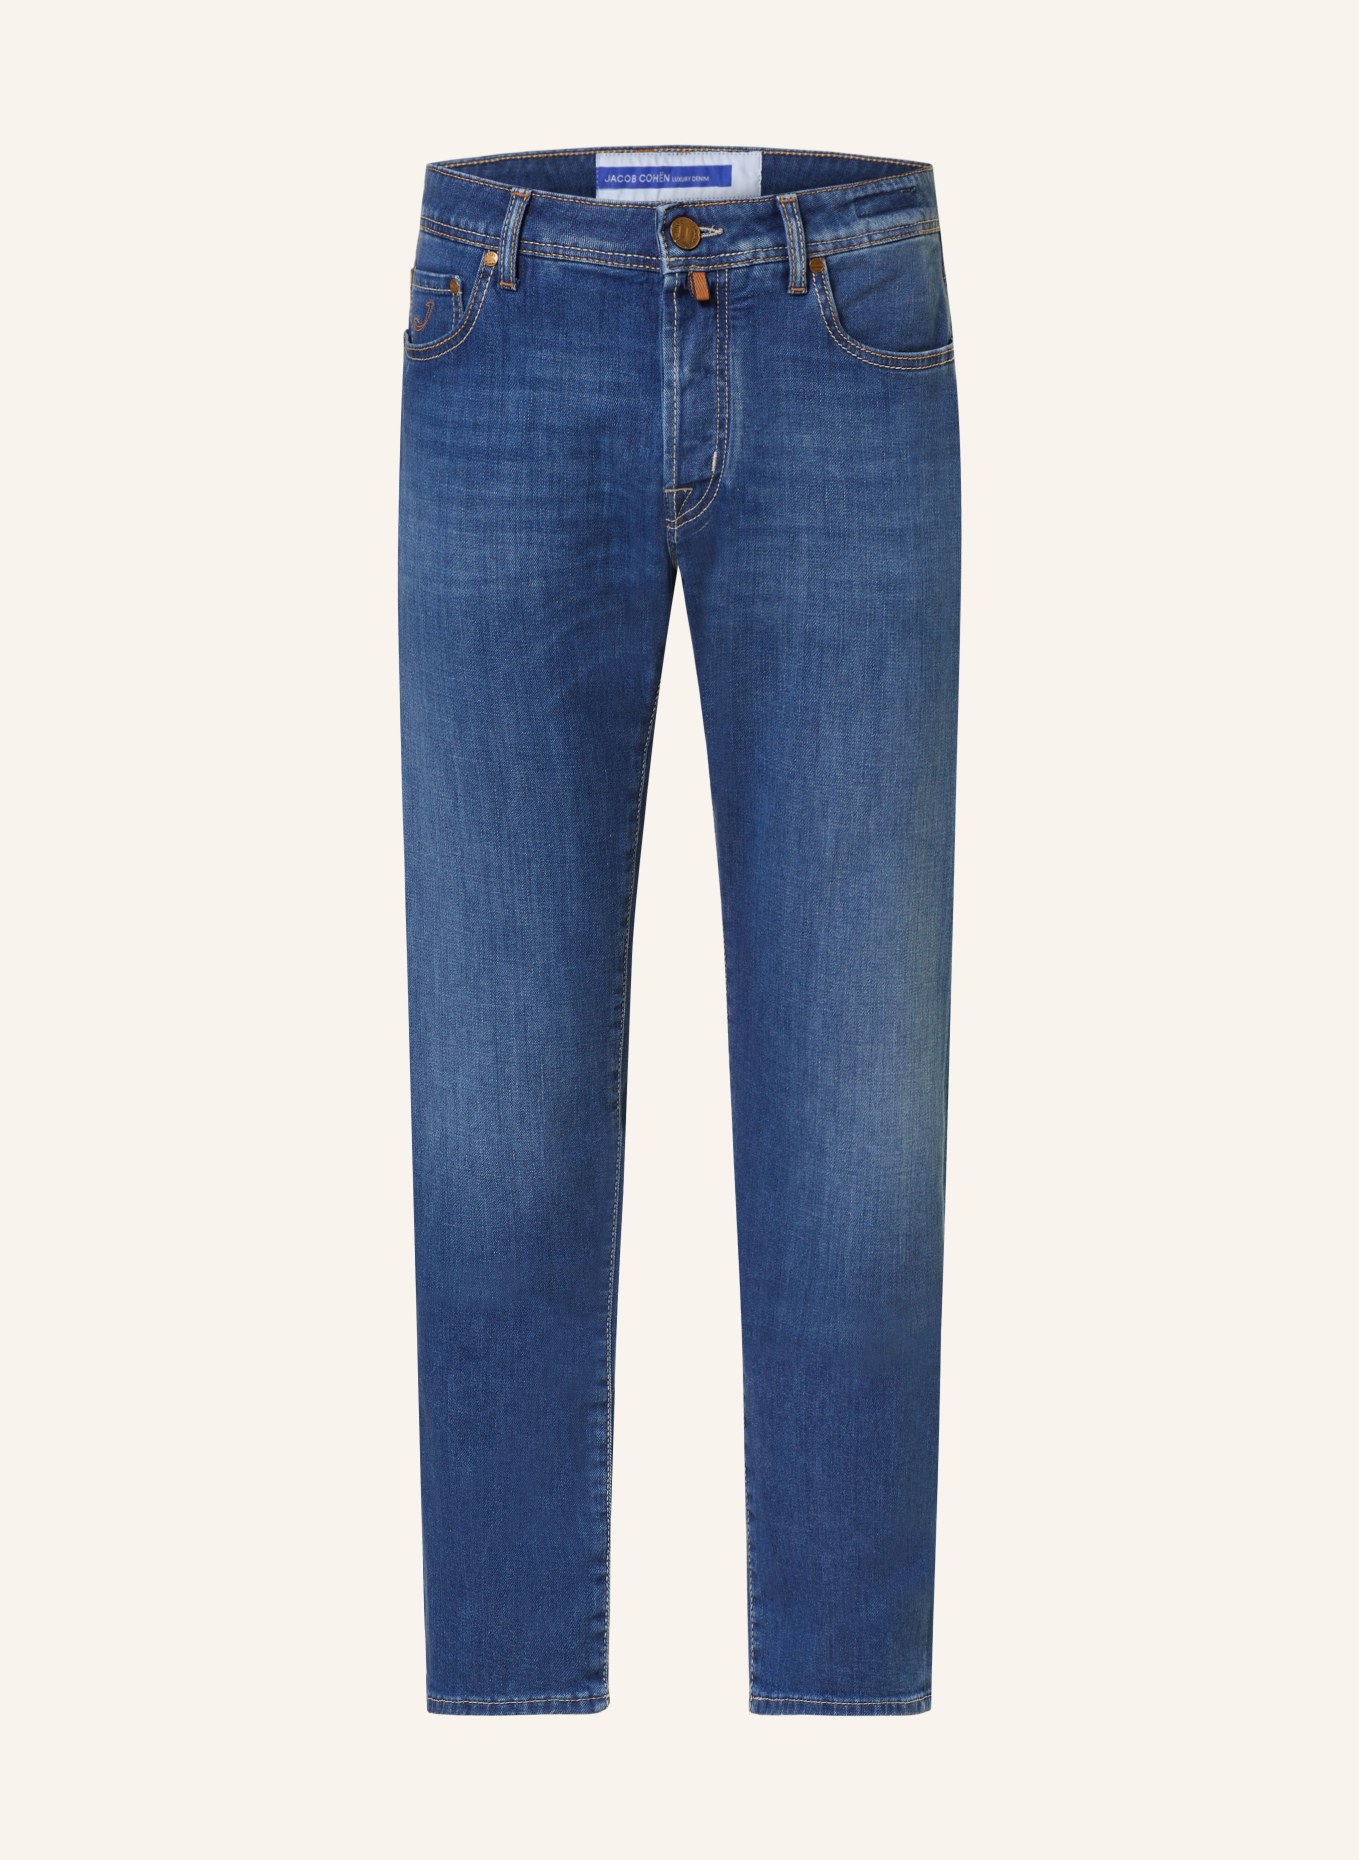 JACOB COHEN Jeans BARD Slim Fit, Farbe: 724D Light Blue (Bild 1)